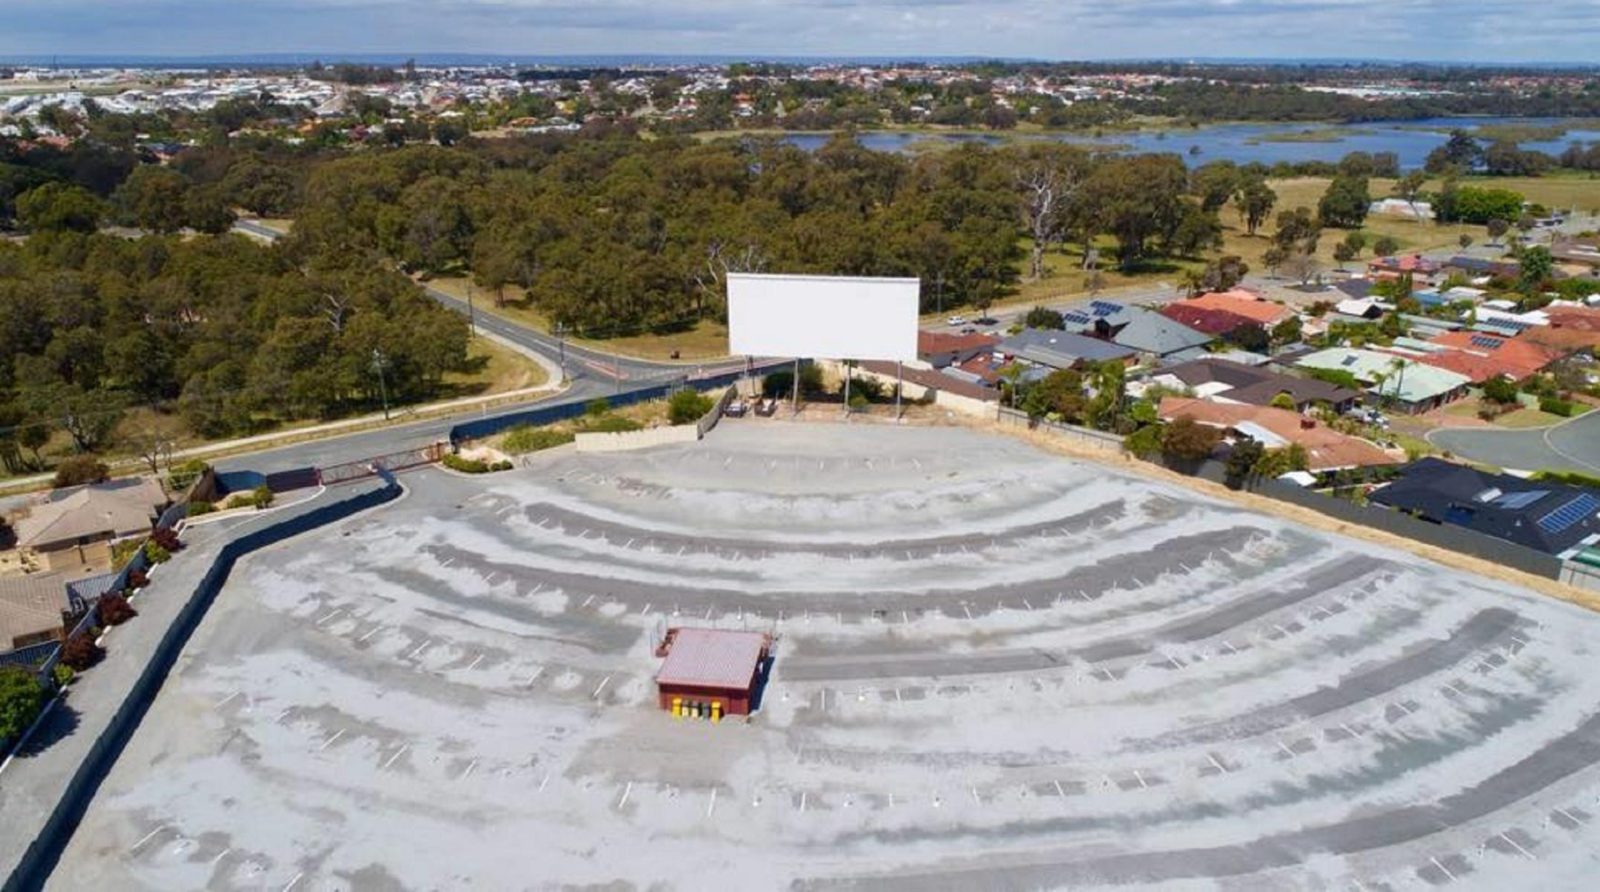 Galaxy Drive-In Theatre, Kingsley, Western Australia